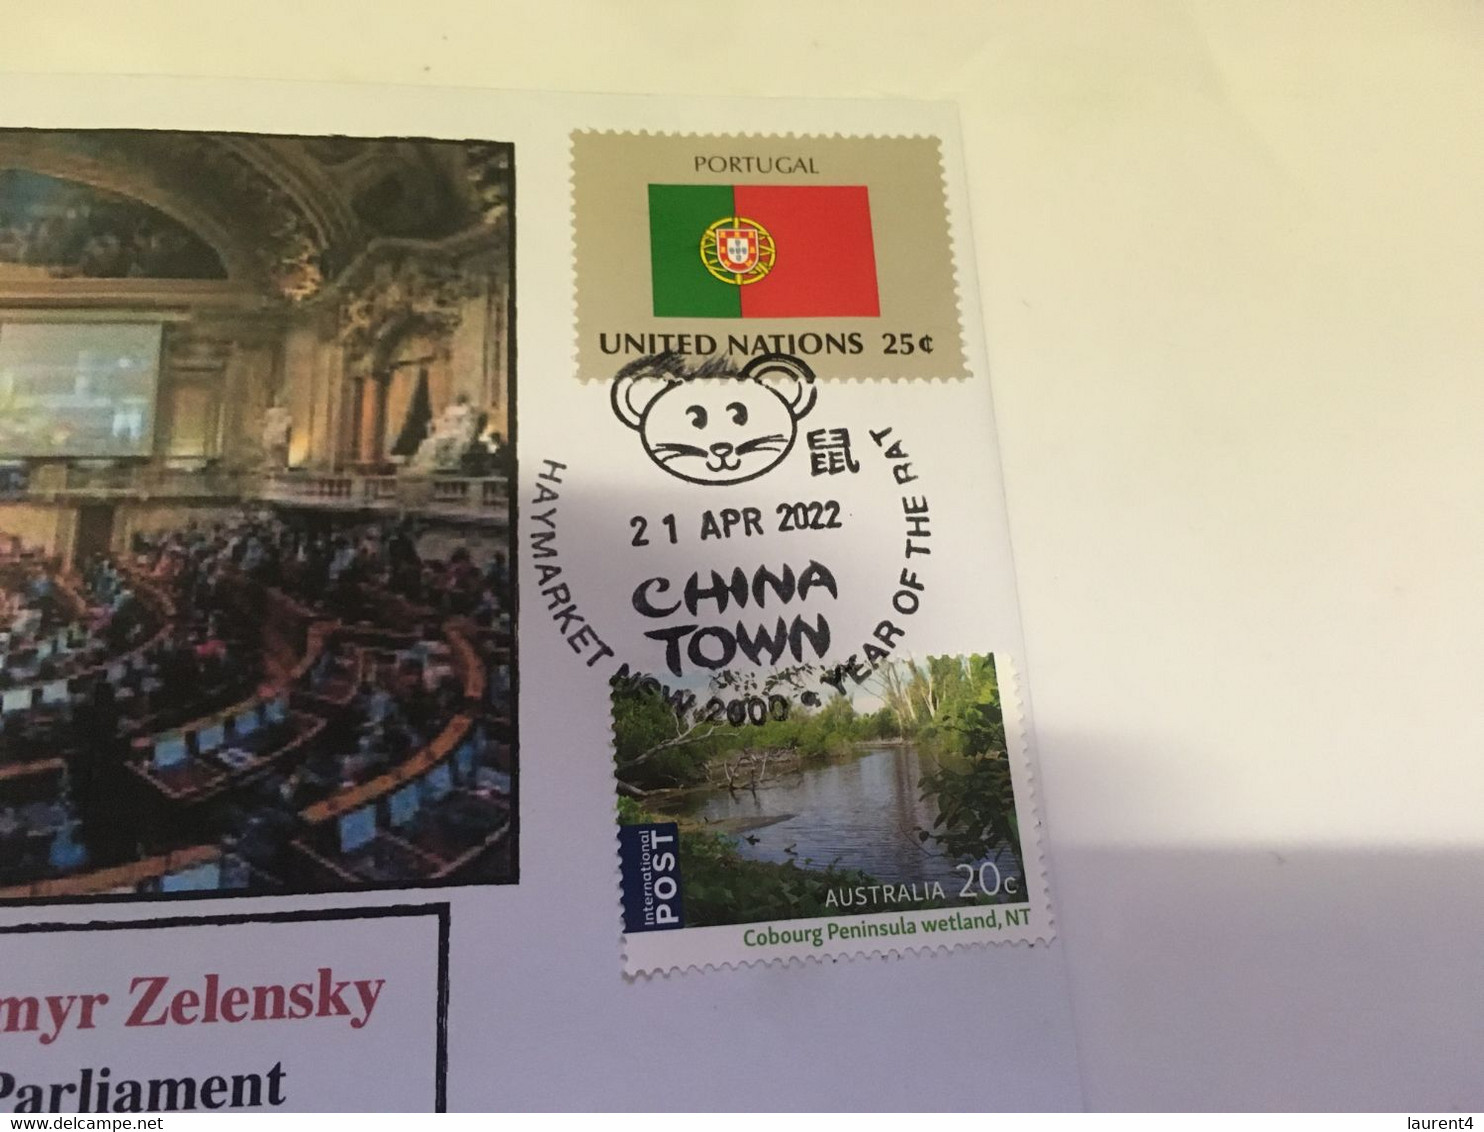 (3 H 28) UKRAINE President Address To Portugal Parliament (21st April 2022) With OZ Map Stamp + Portugal Flag Stamp - Briefe U. Dokumente